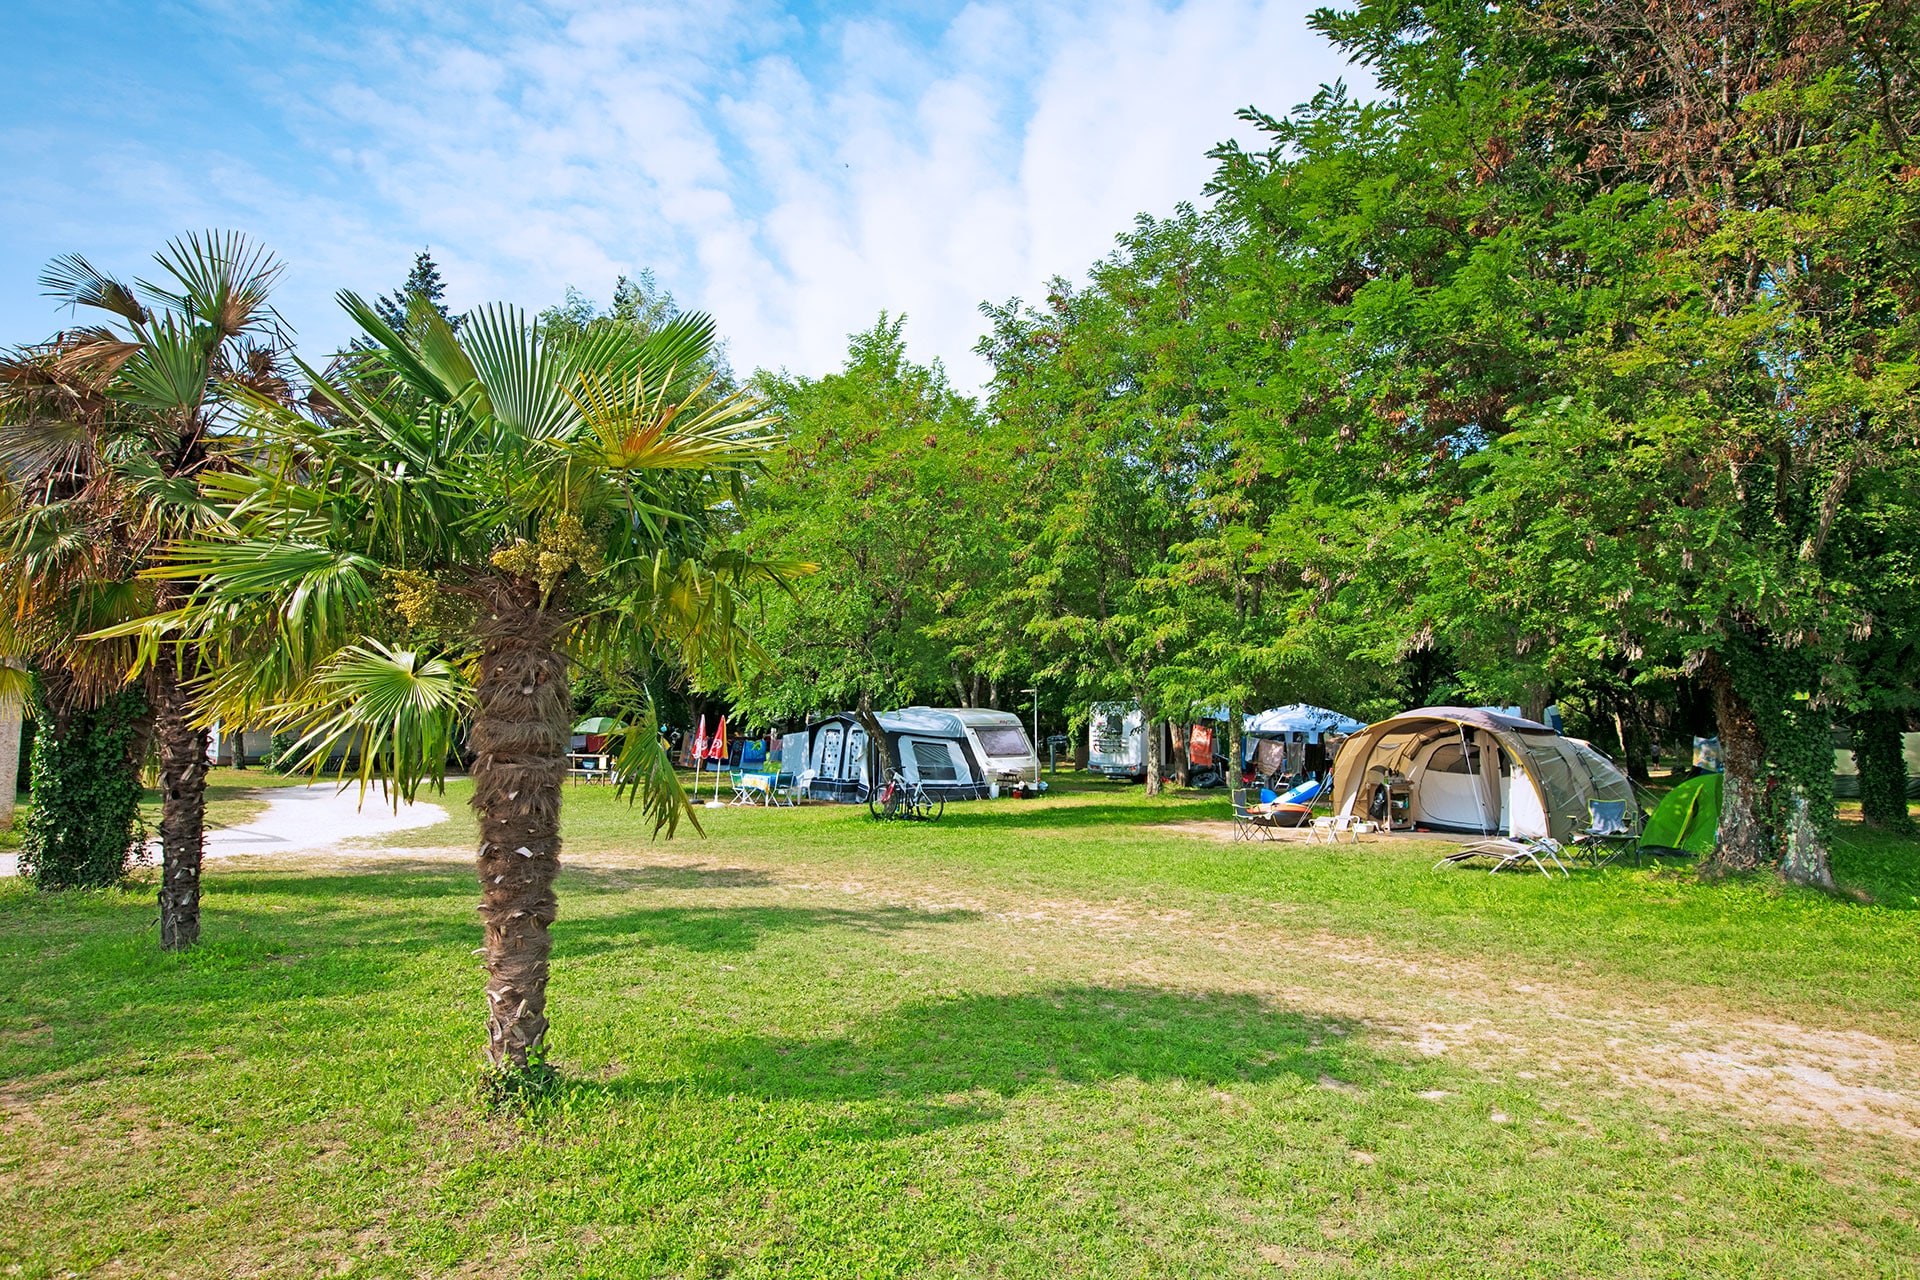 ✓ SITE OFFICIEL - Camping 4 étoiles campinglagrandterre à Ruoms